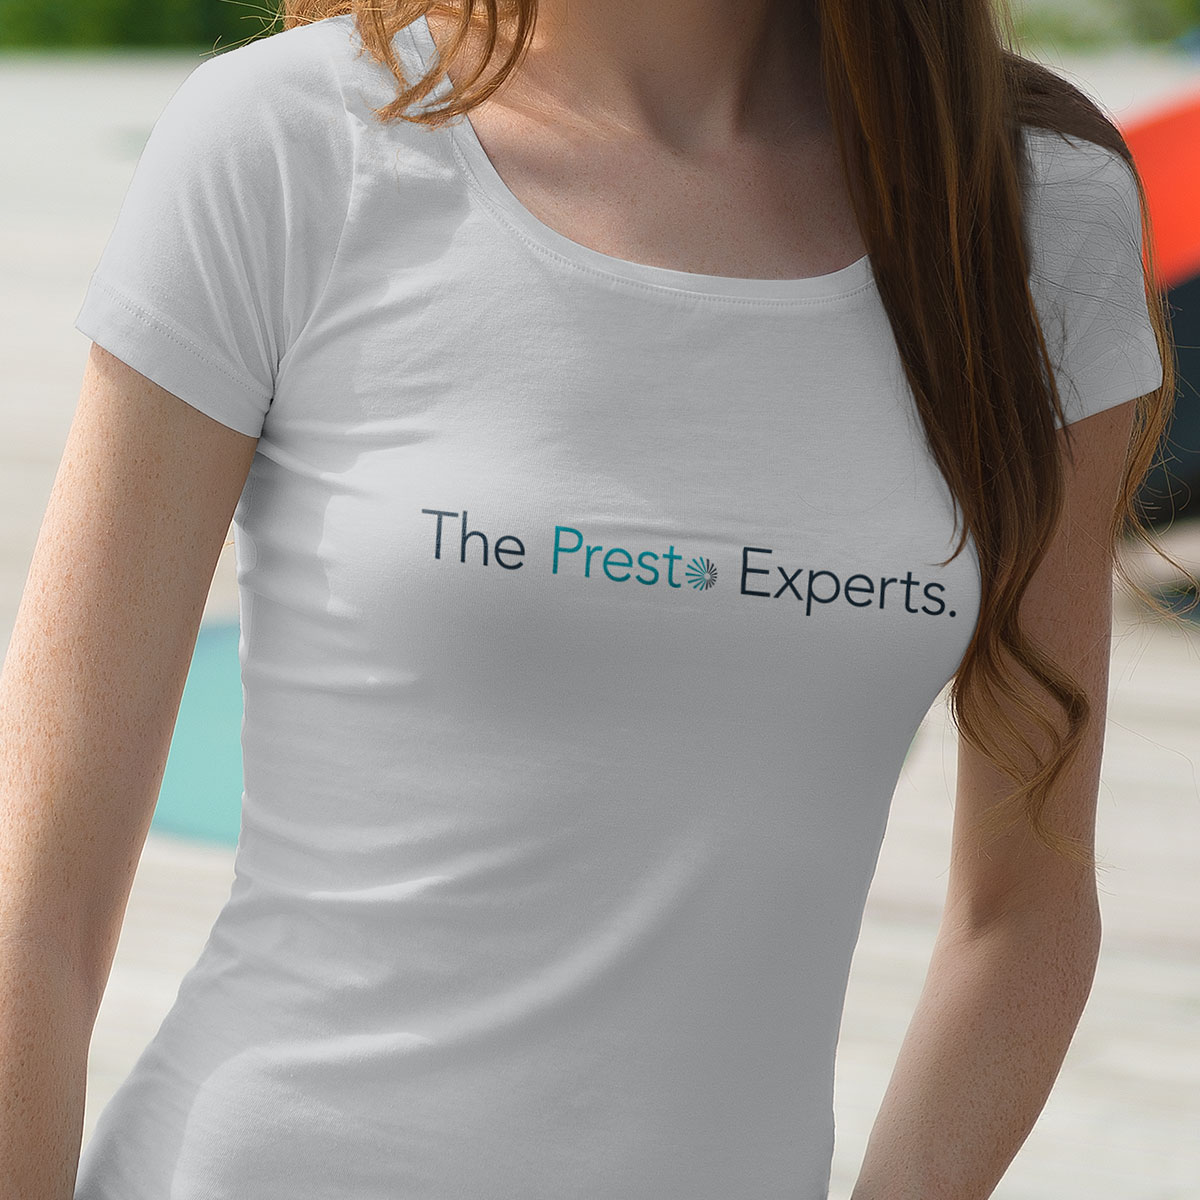 Starburst Data Brand Identity – Woman Wearing The Presto Experts T-Shirt Design